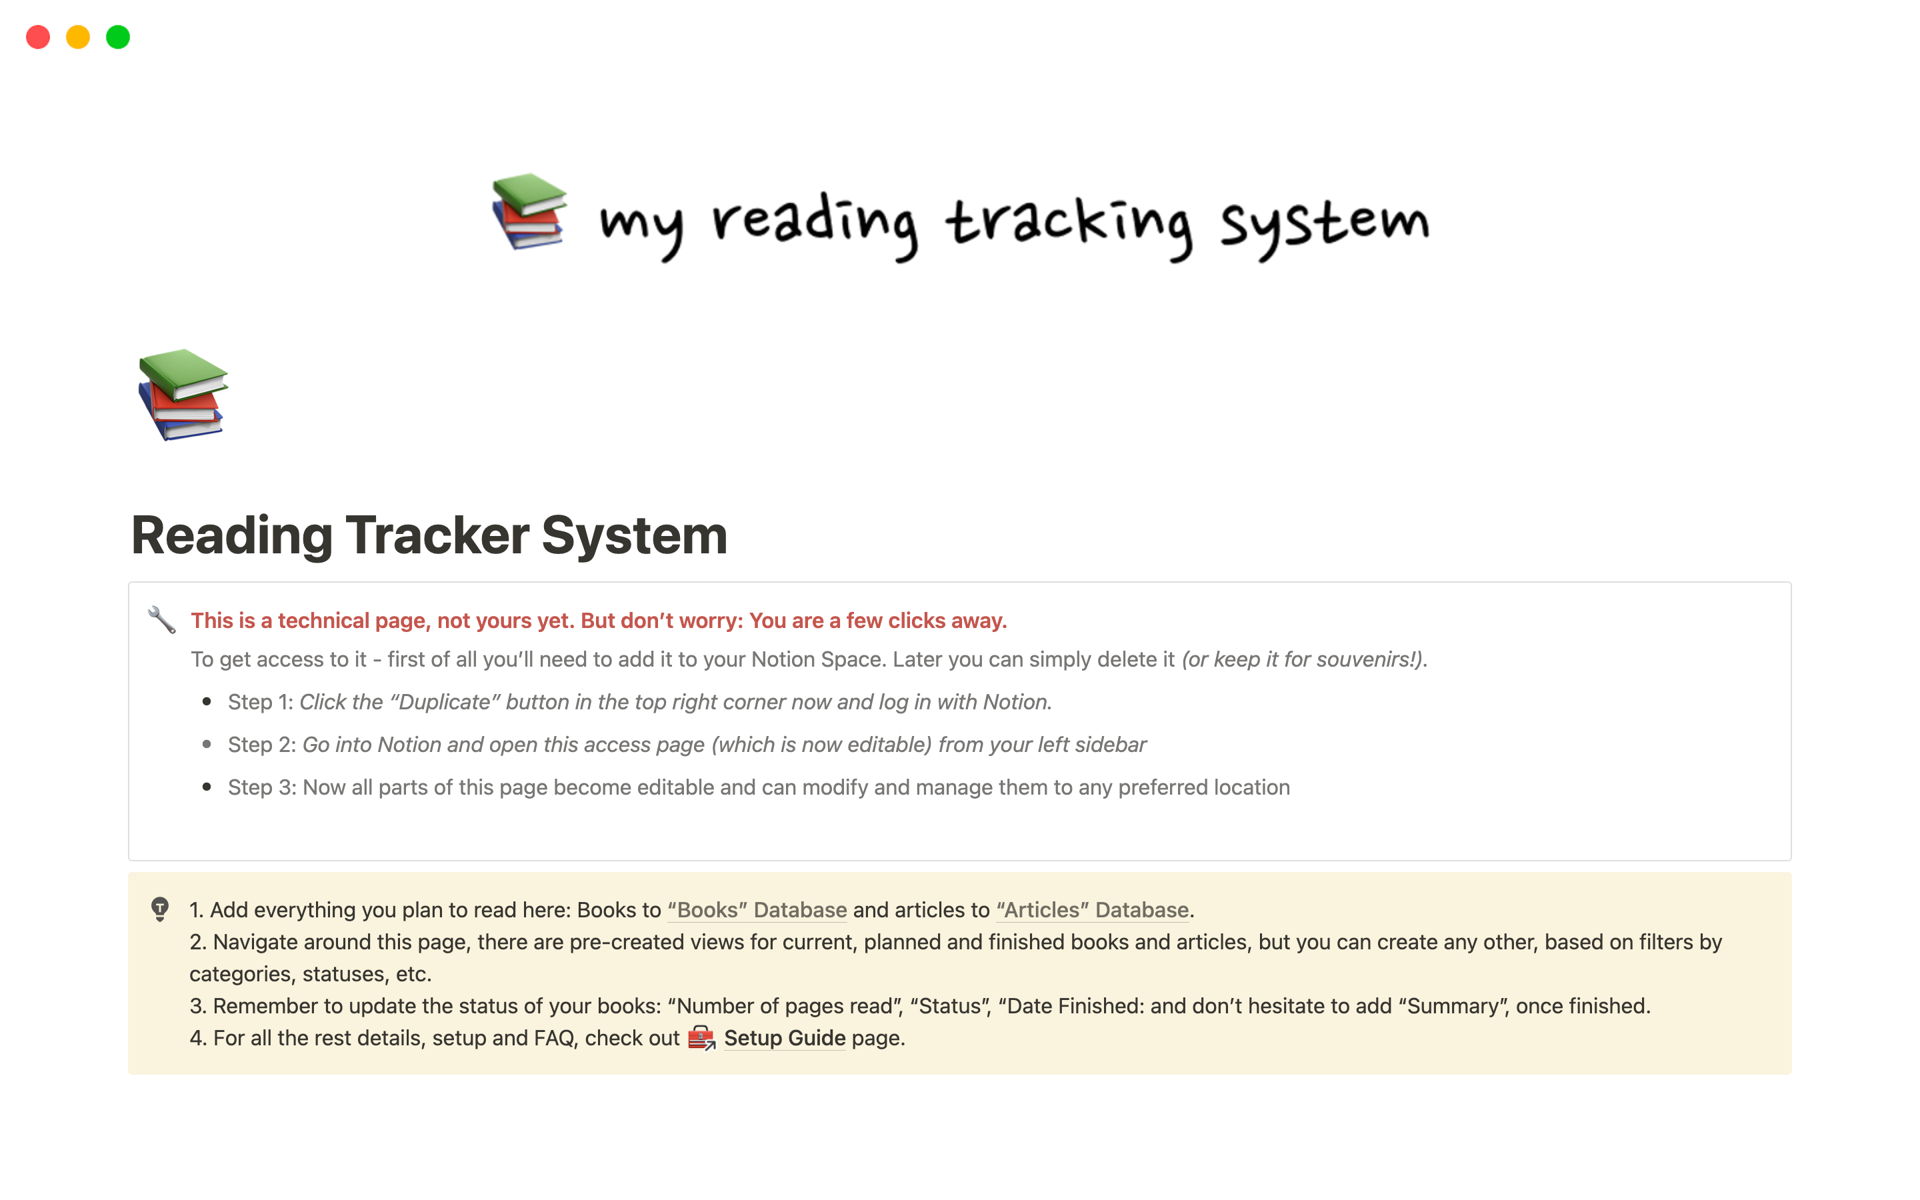 Aperçu du modèle de Reading Tracker System